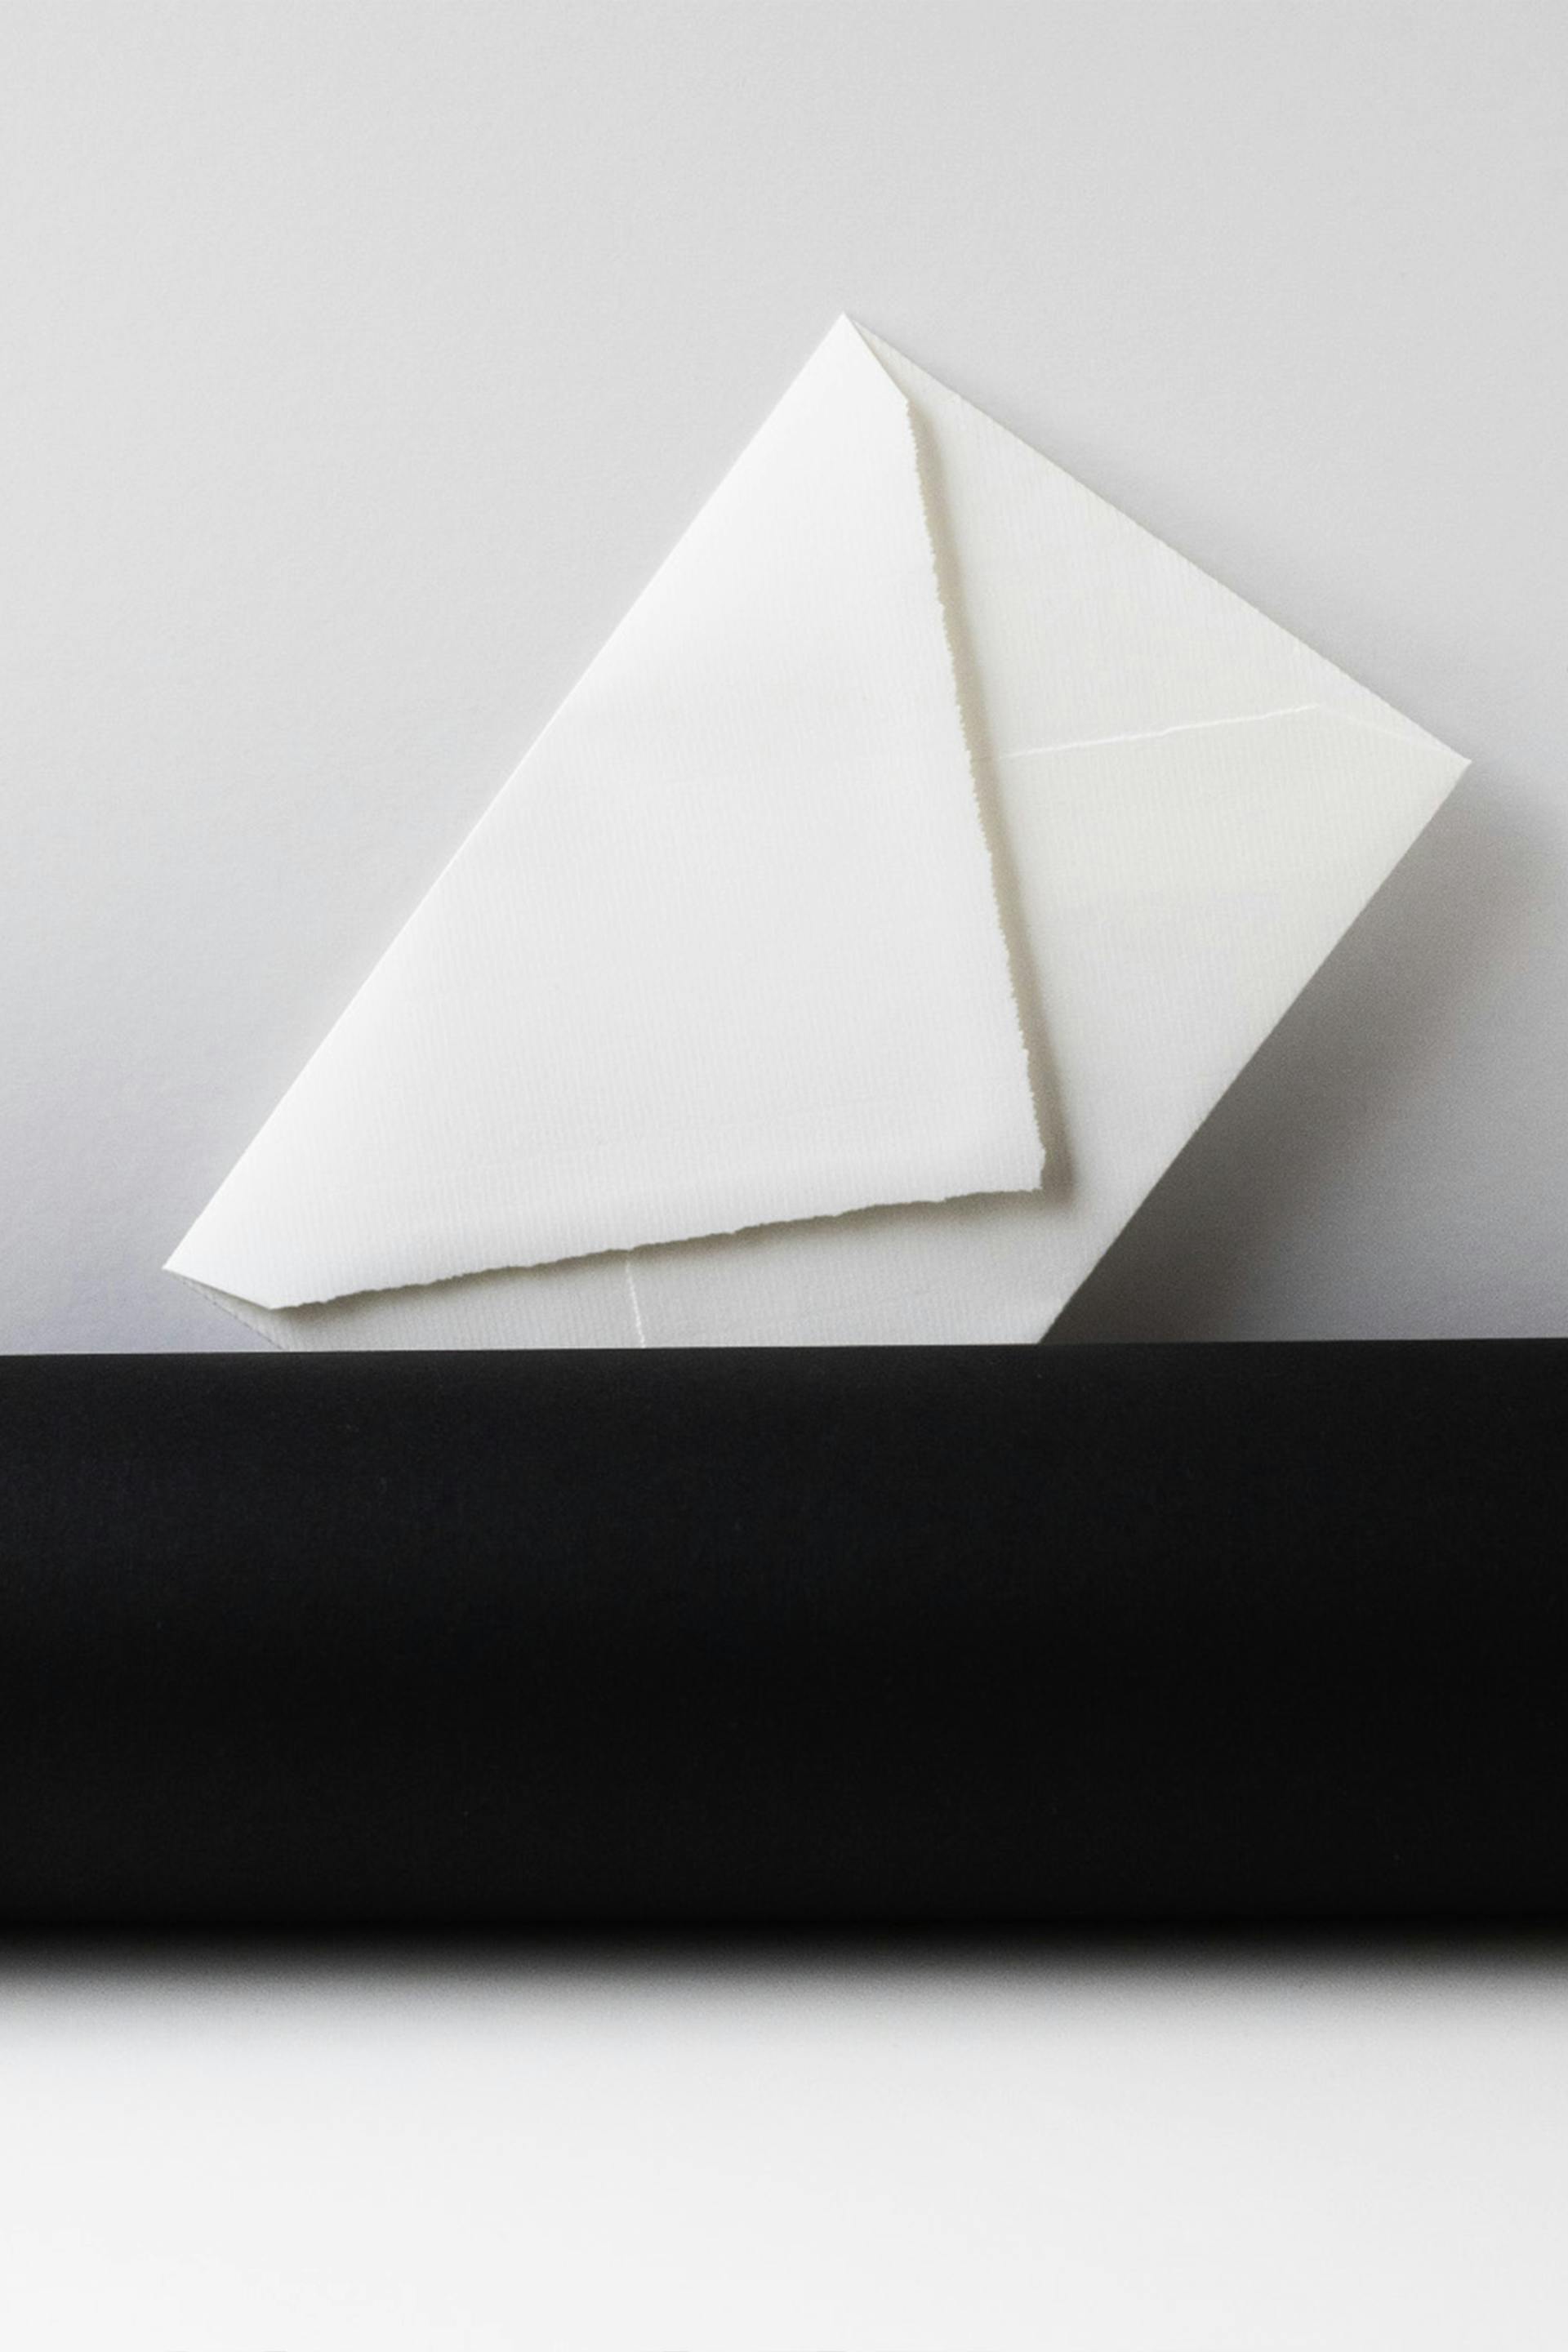 Une enveloppe blanche | Source : Unsplash